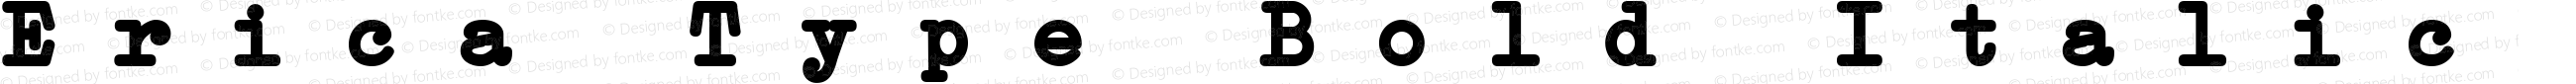 Erica Type Bold Italic